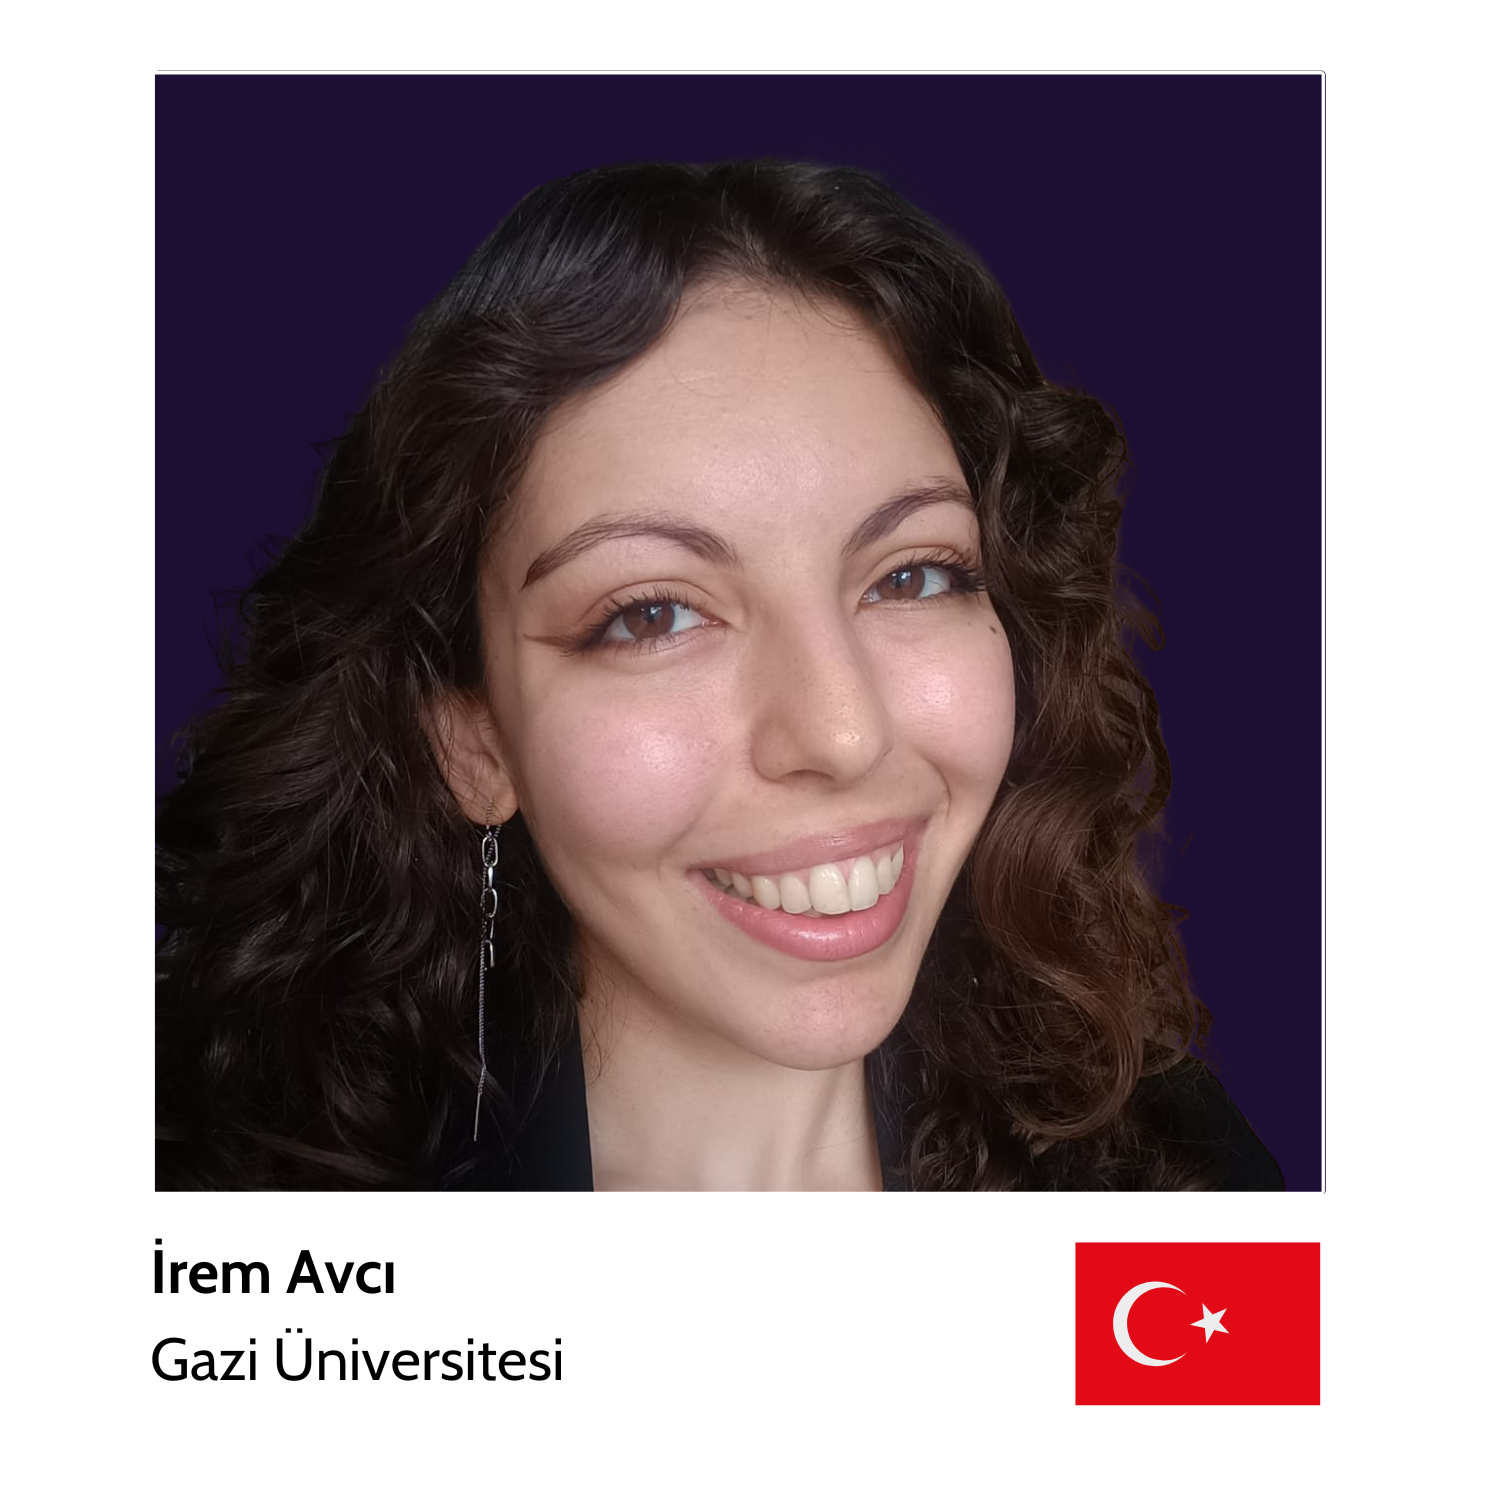 Your_Big_Year_ibm_z_student_ambassador_İrem_Avcı_Gazi_Üniversitesi.png